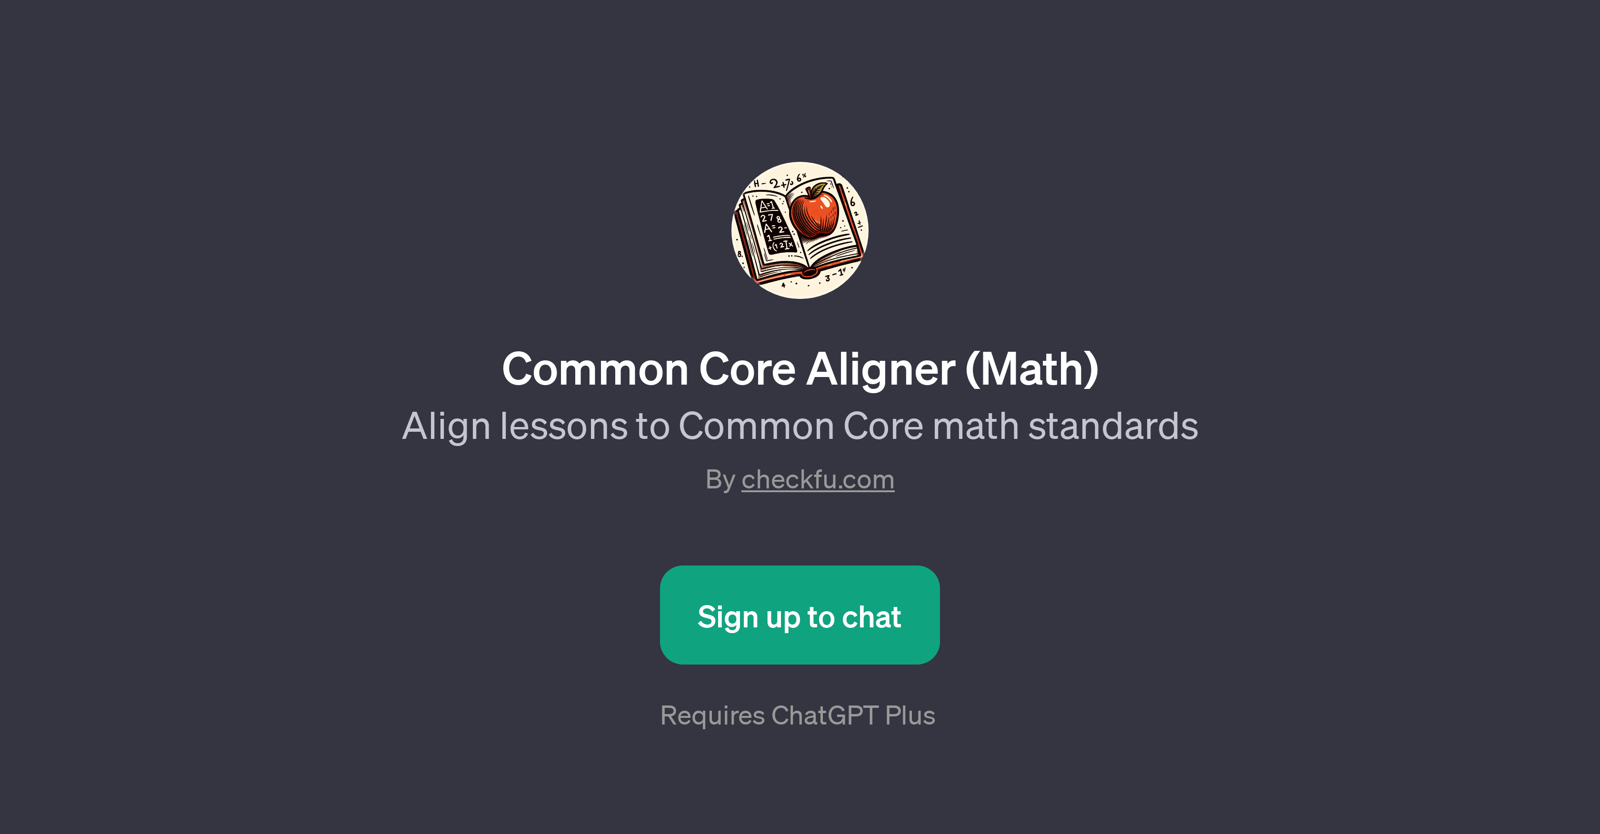 Common Core Aligner (Math) website